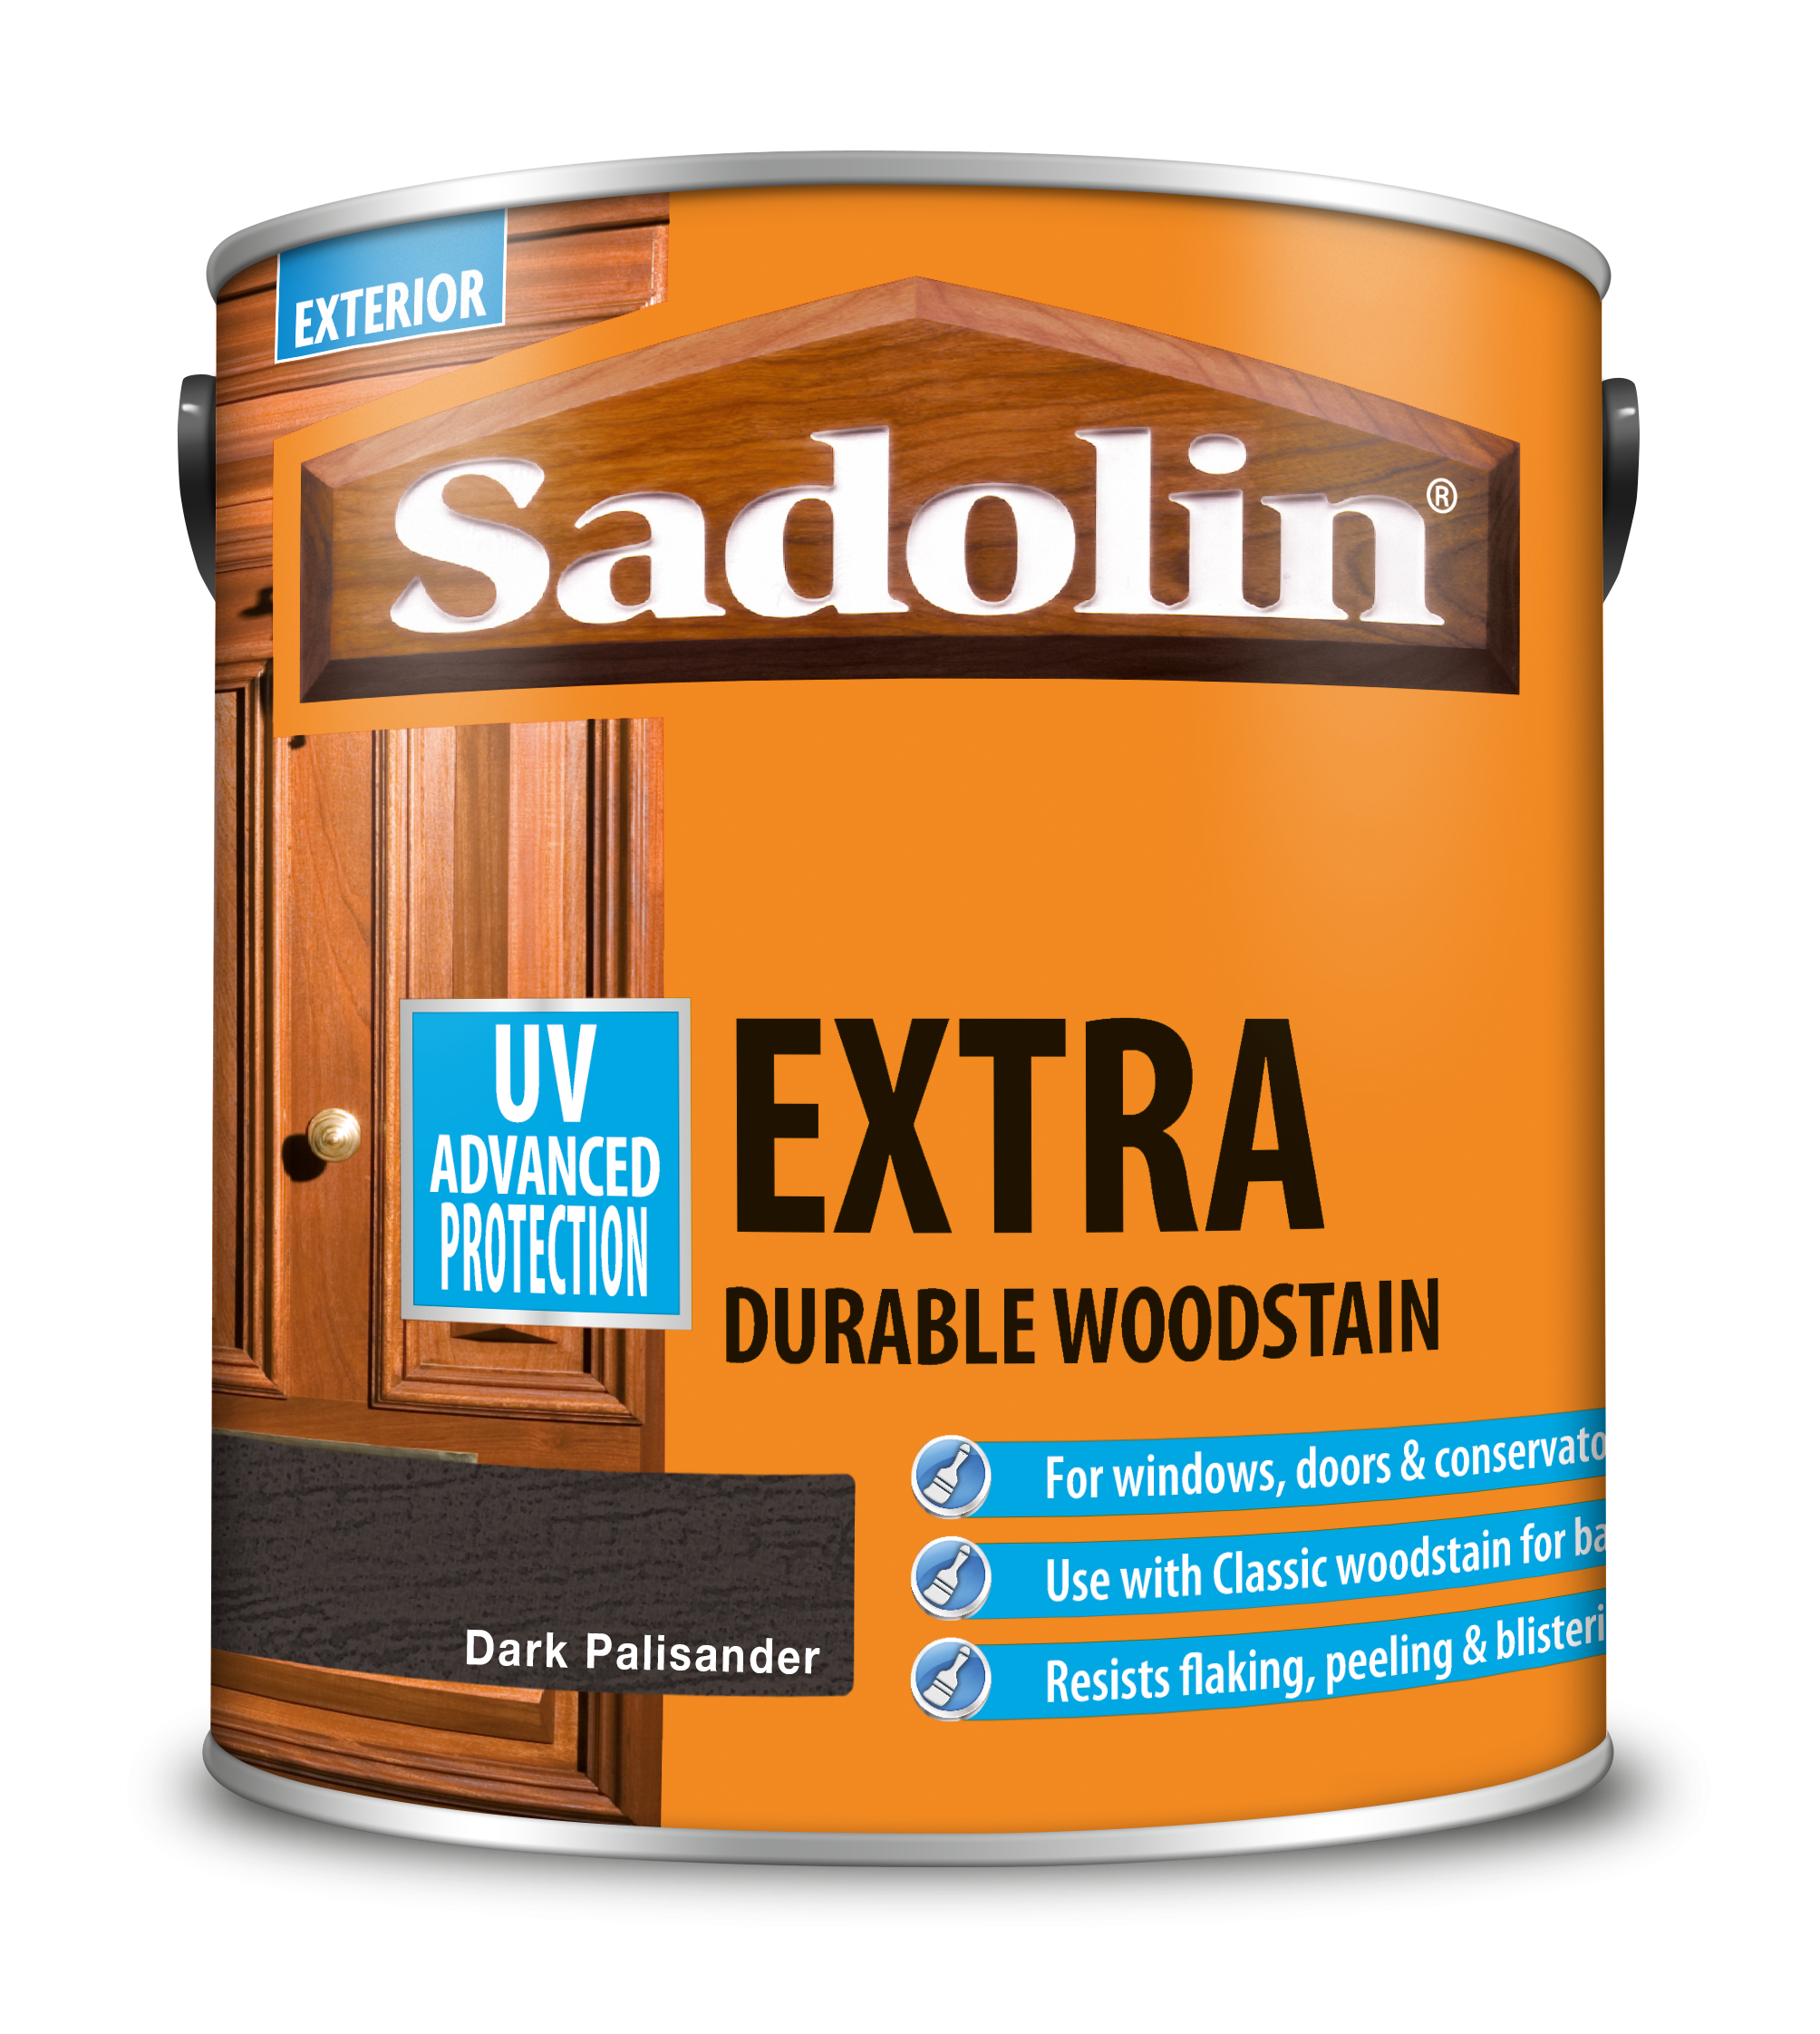 Sadolin Extra Durable Woodstain Dark Palisander 2.5L [MPPSSUT]  5028548